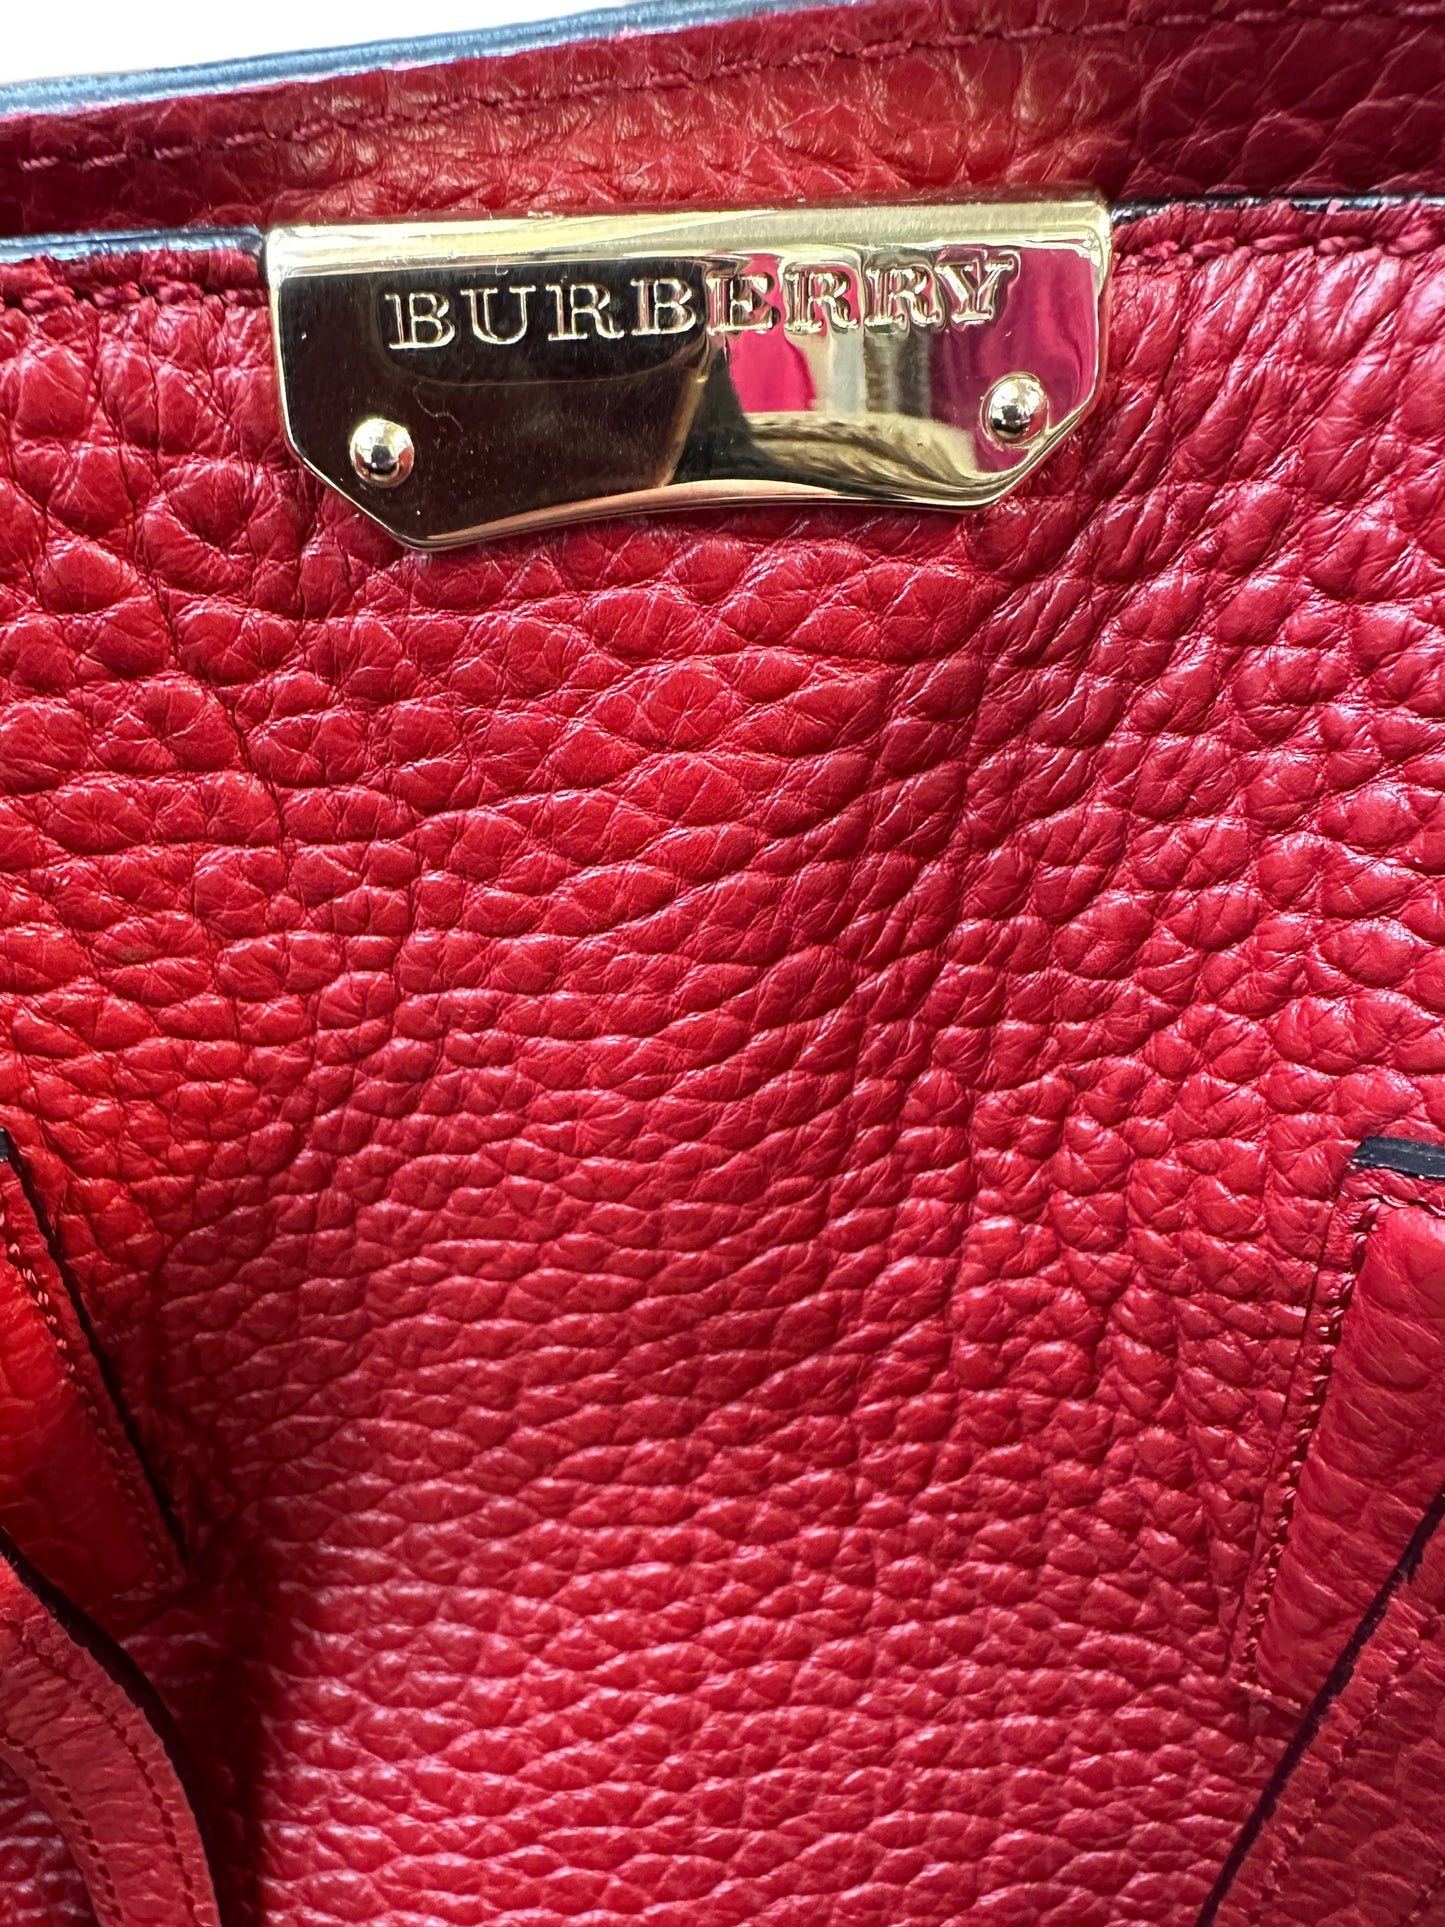 Burberry tote